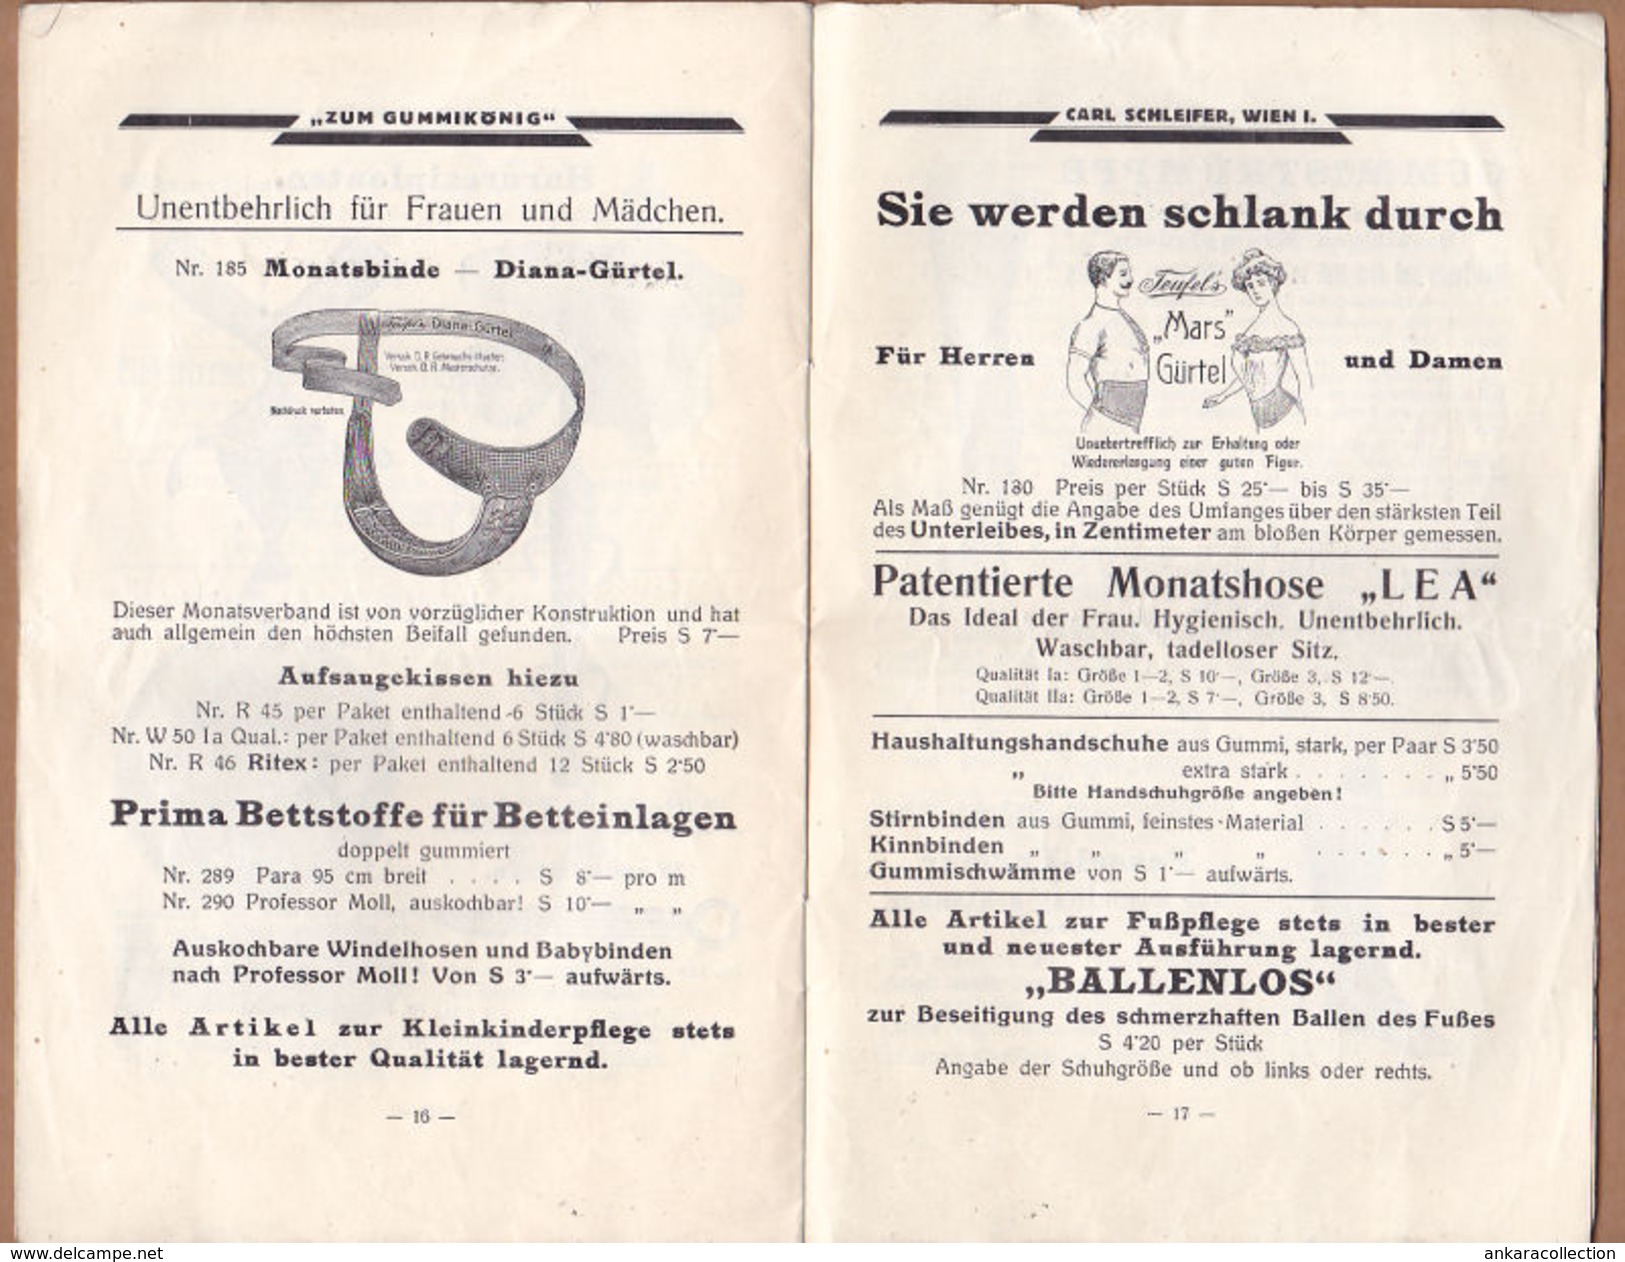 AC - PREISLISTE HYGIENISCHE GUMMI SPEZIALITATEN 1931 BOOKLET